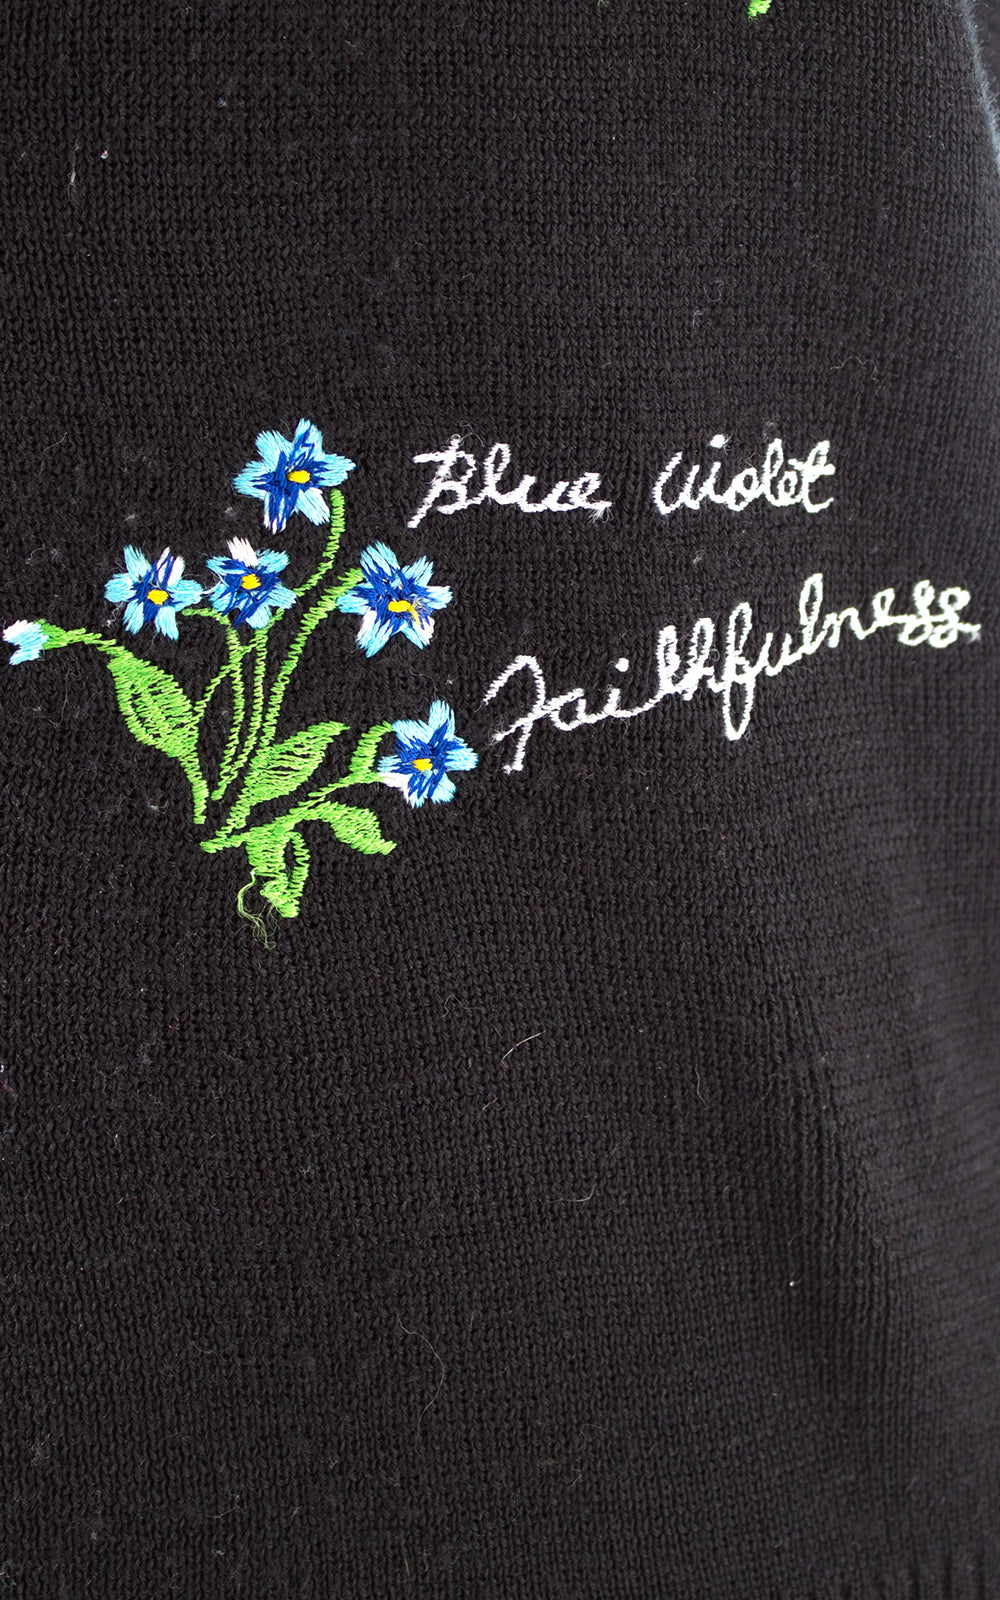 1970s Language of Flowers Embroidered Sweater BirthdayLifeVintage